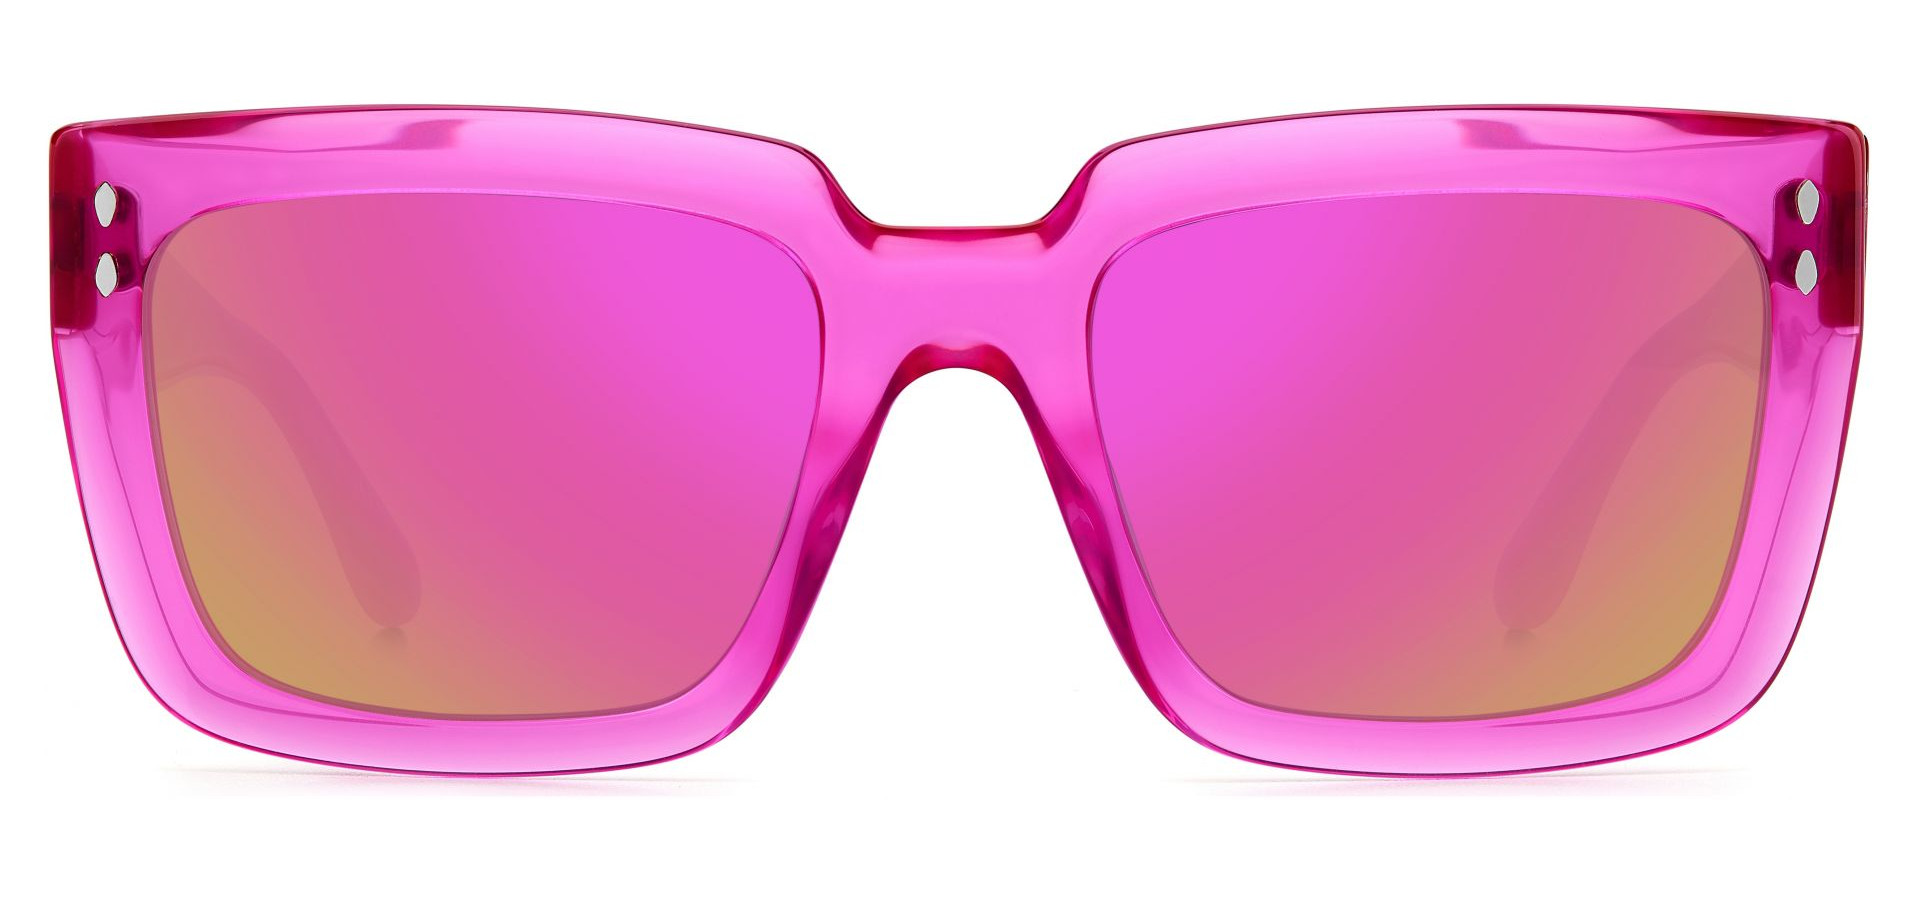 Sunčane naočale Isabel Marant ISABEL MARANT 0005/N/S: Boja: Hot Pink, Veličina: 55, Spol: ženske, Materijal: acetat